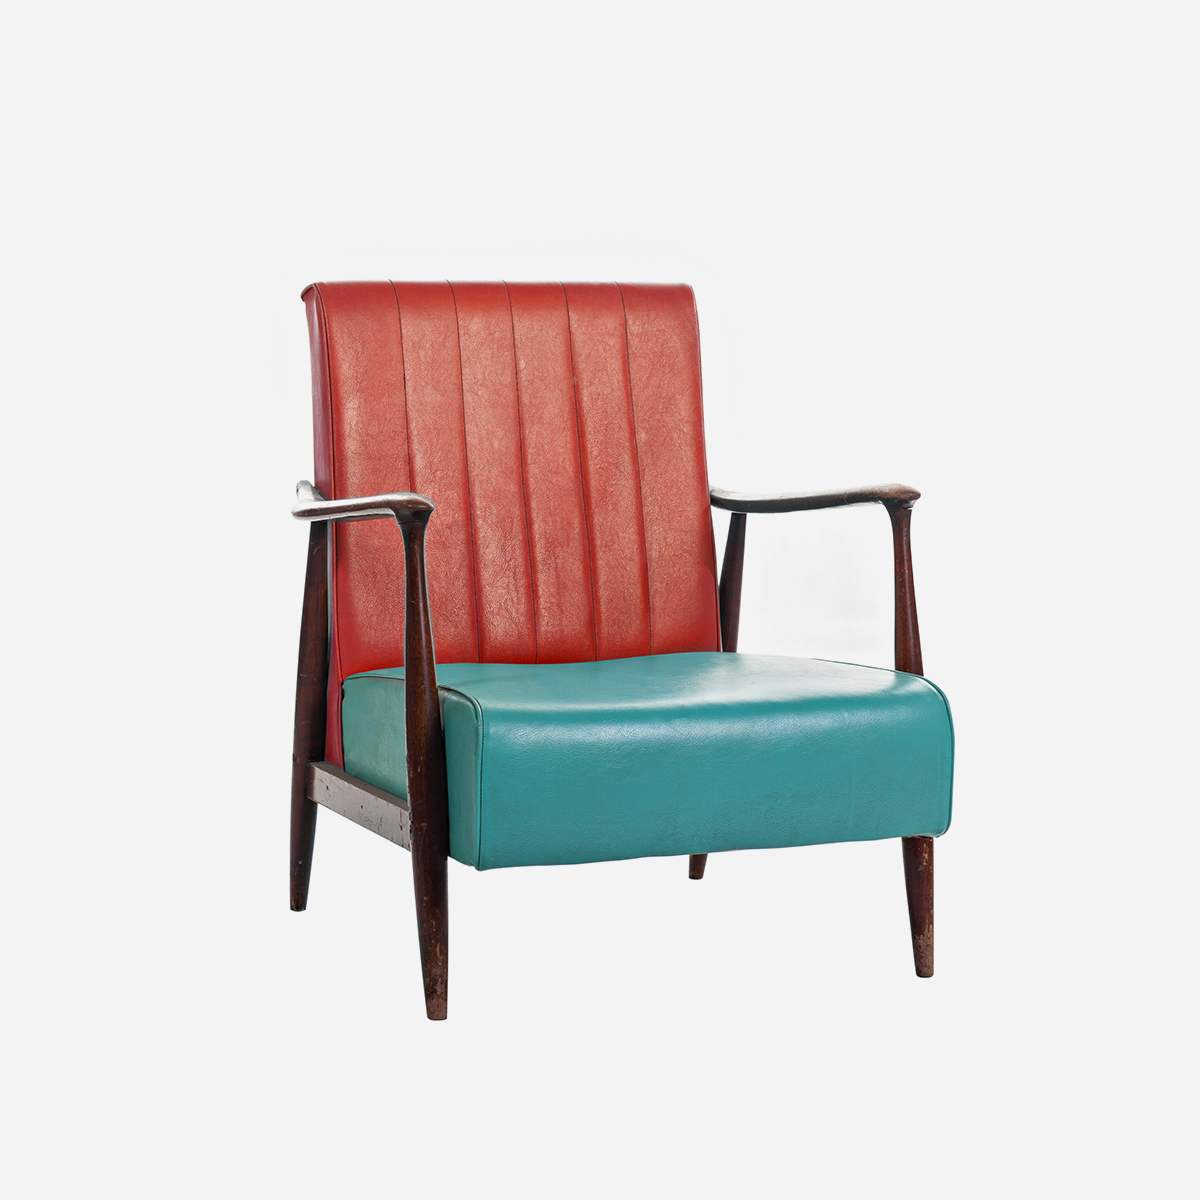 Leather Vintage Chair Engic A Sleek, Leather Retro Chair